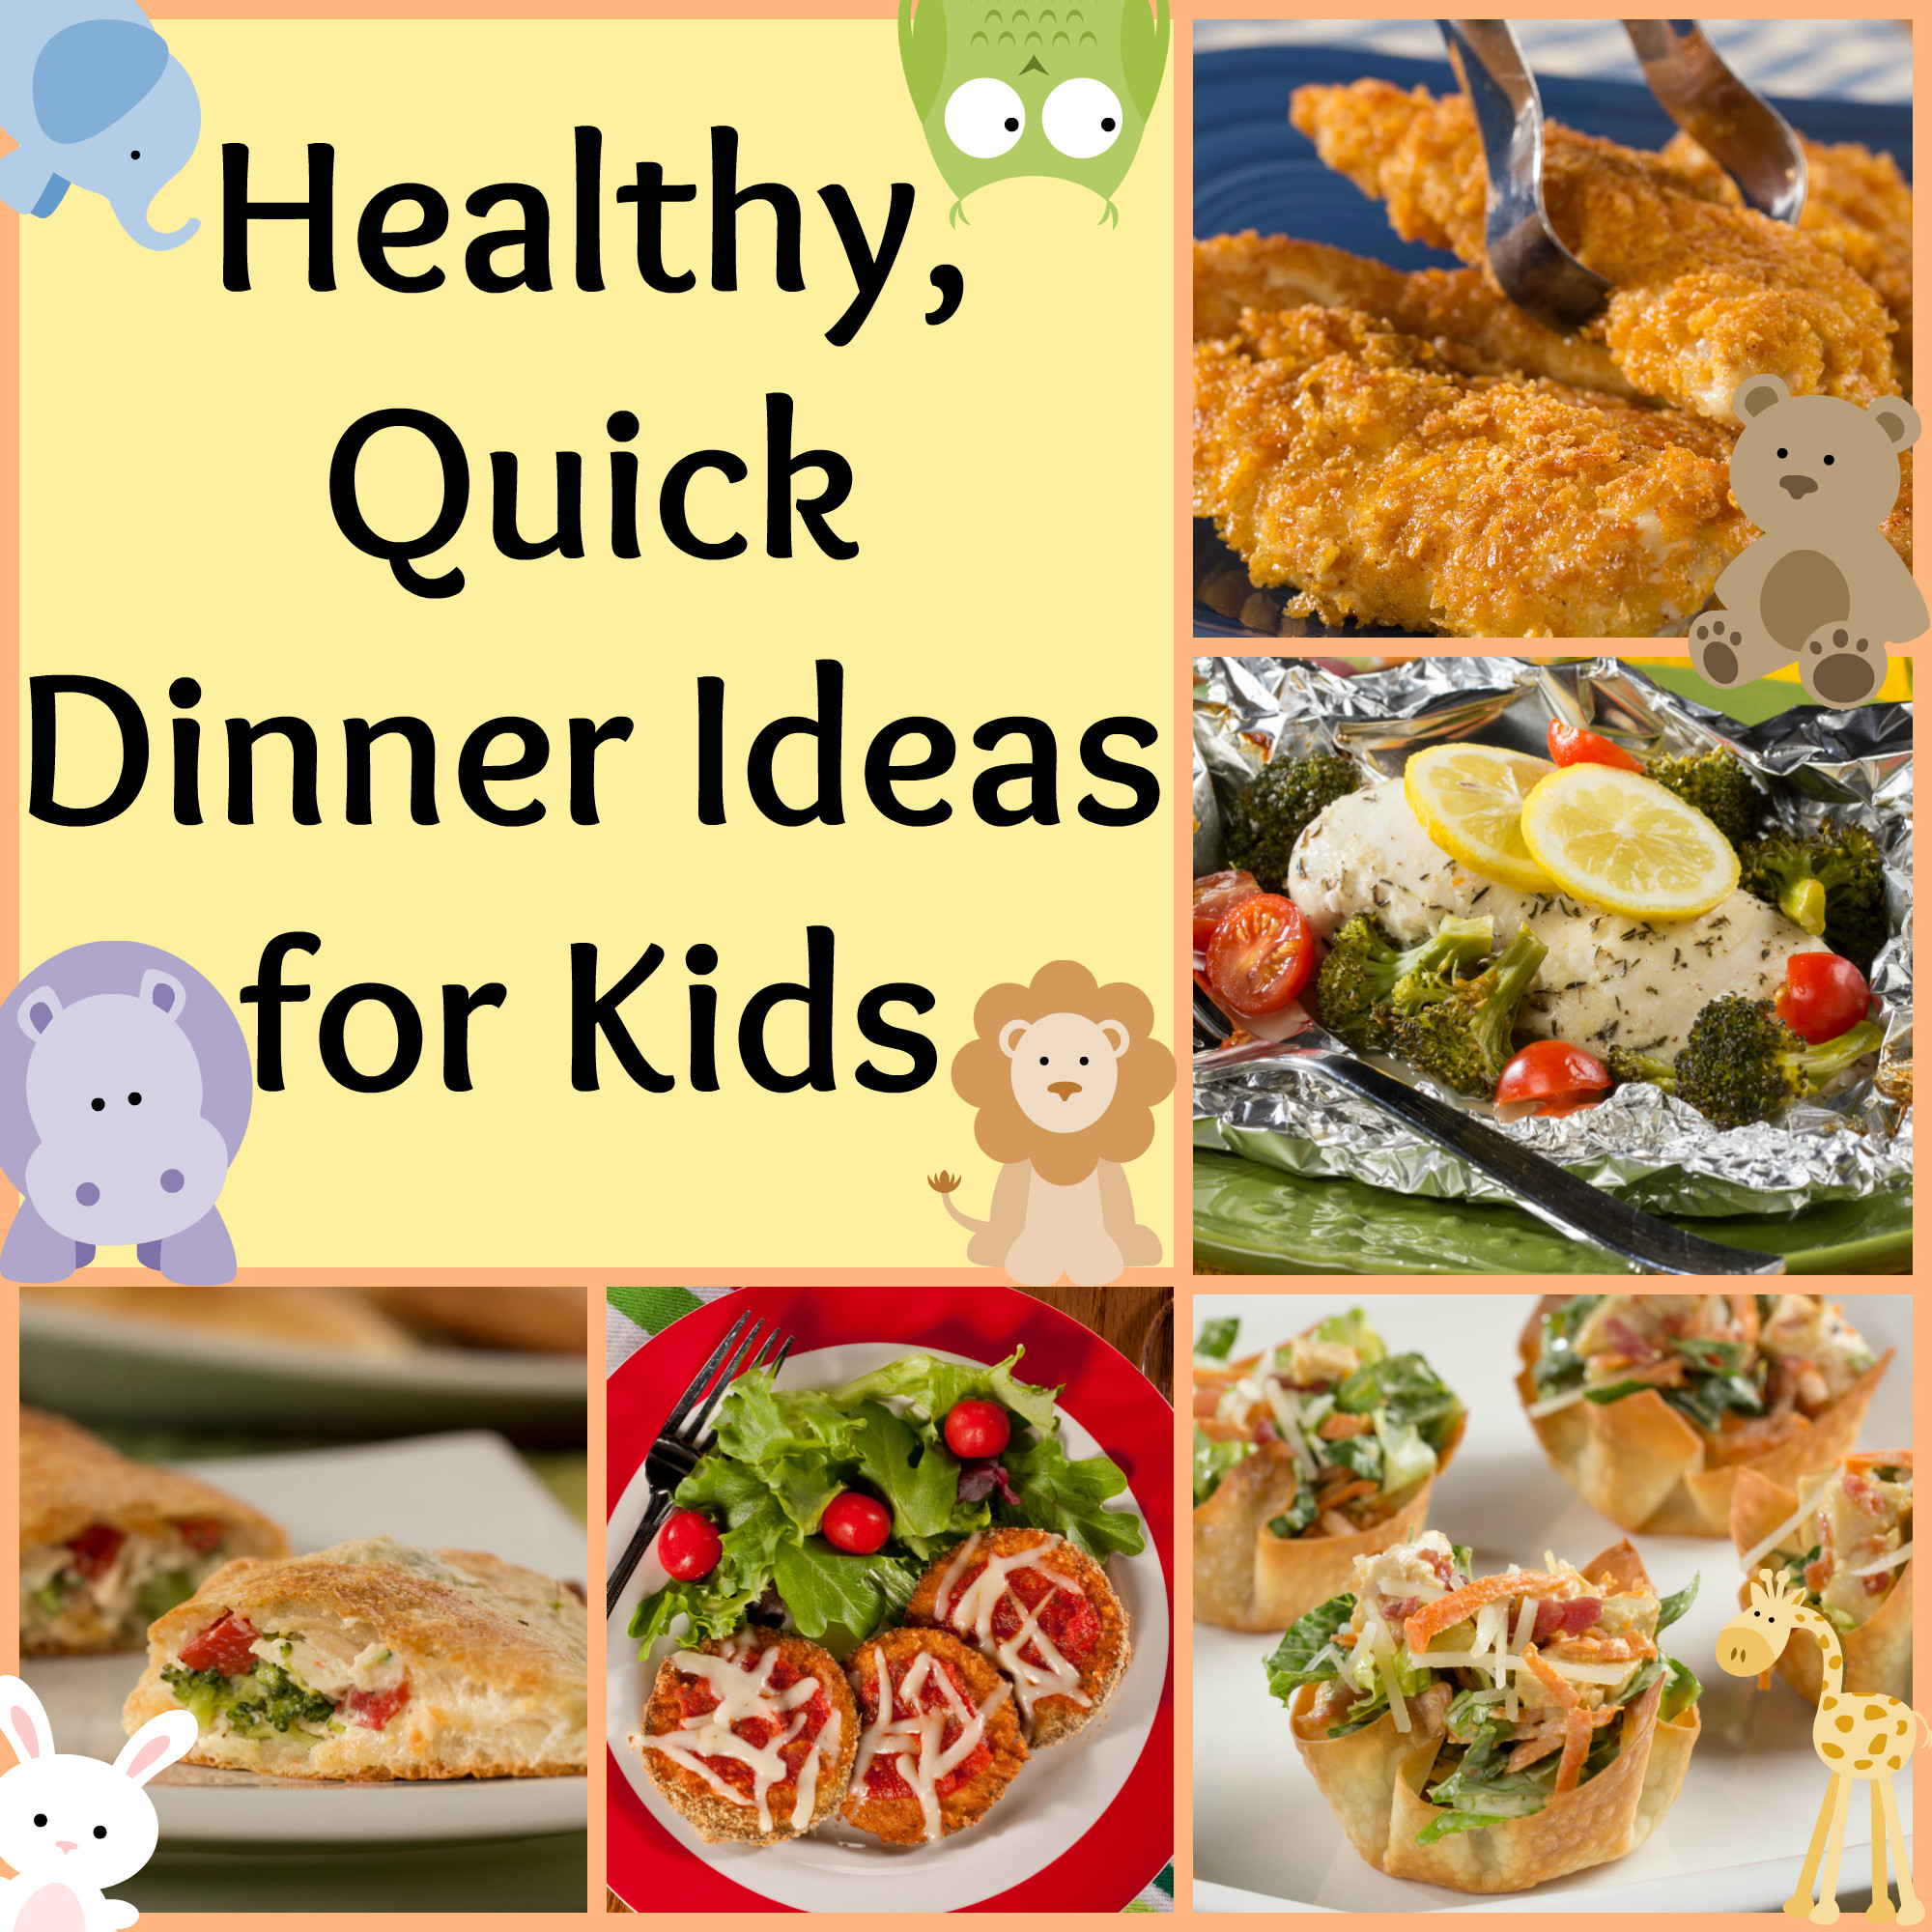 Easy Dinner Ideas For Kids
 Healthy Quick Dinner Ideas for Kids Mr Food s Blog